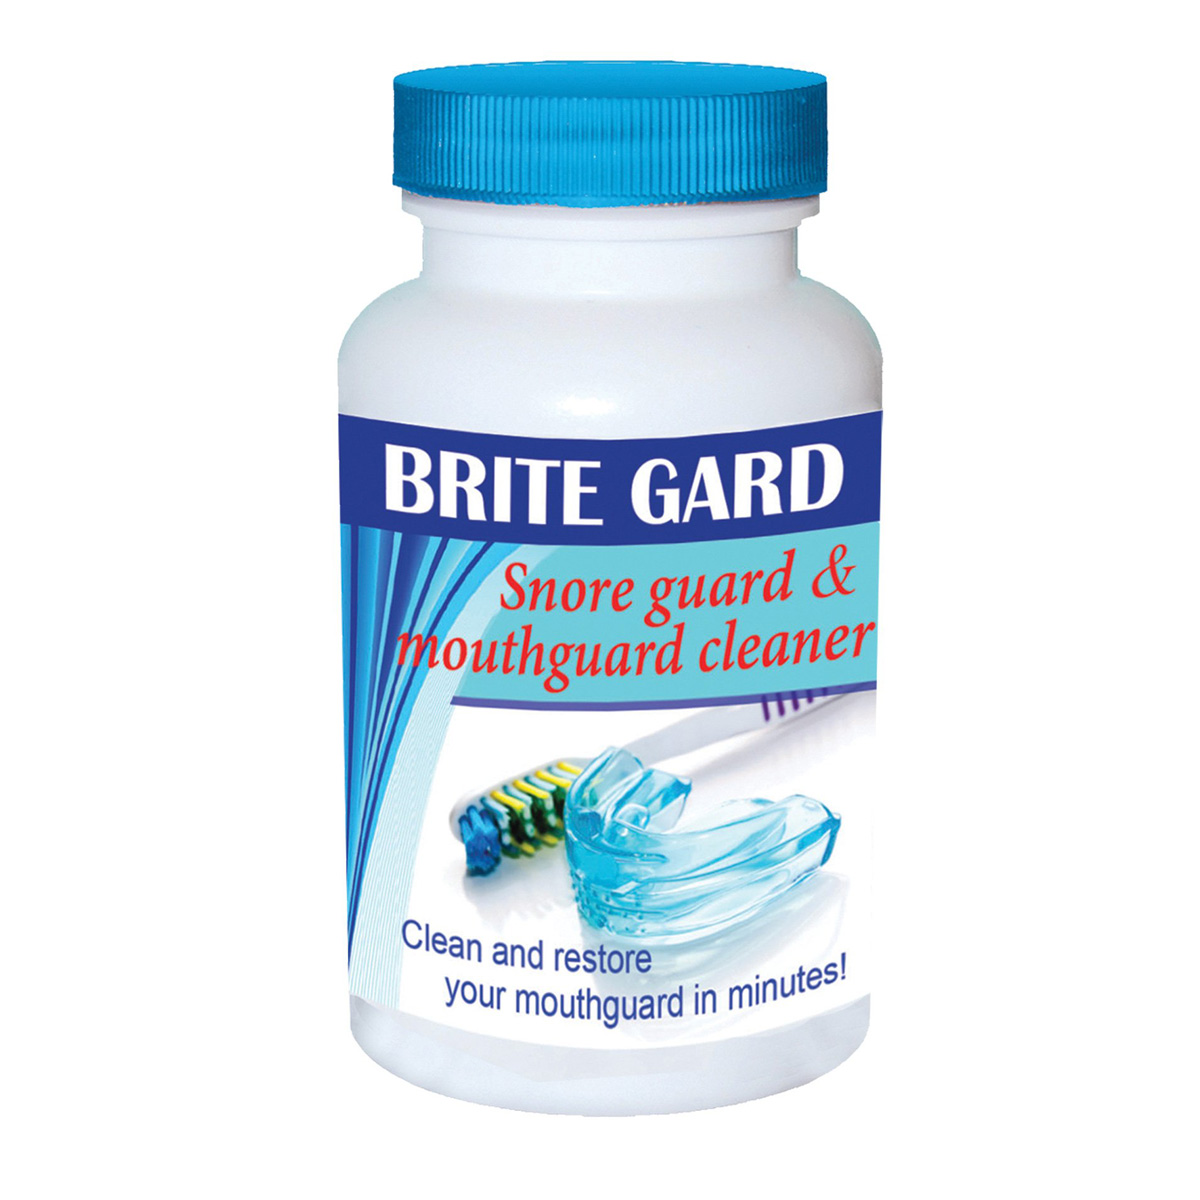 Brite Gard - Mouth Guard Cleaner 8 oz